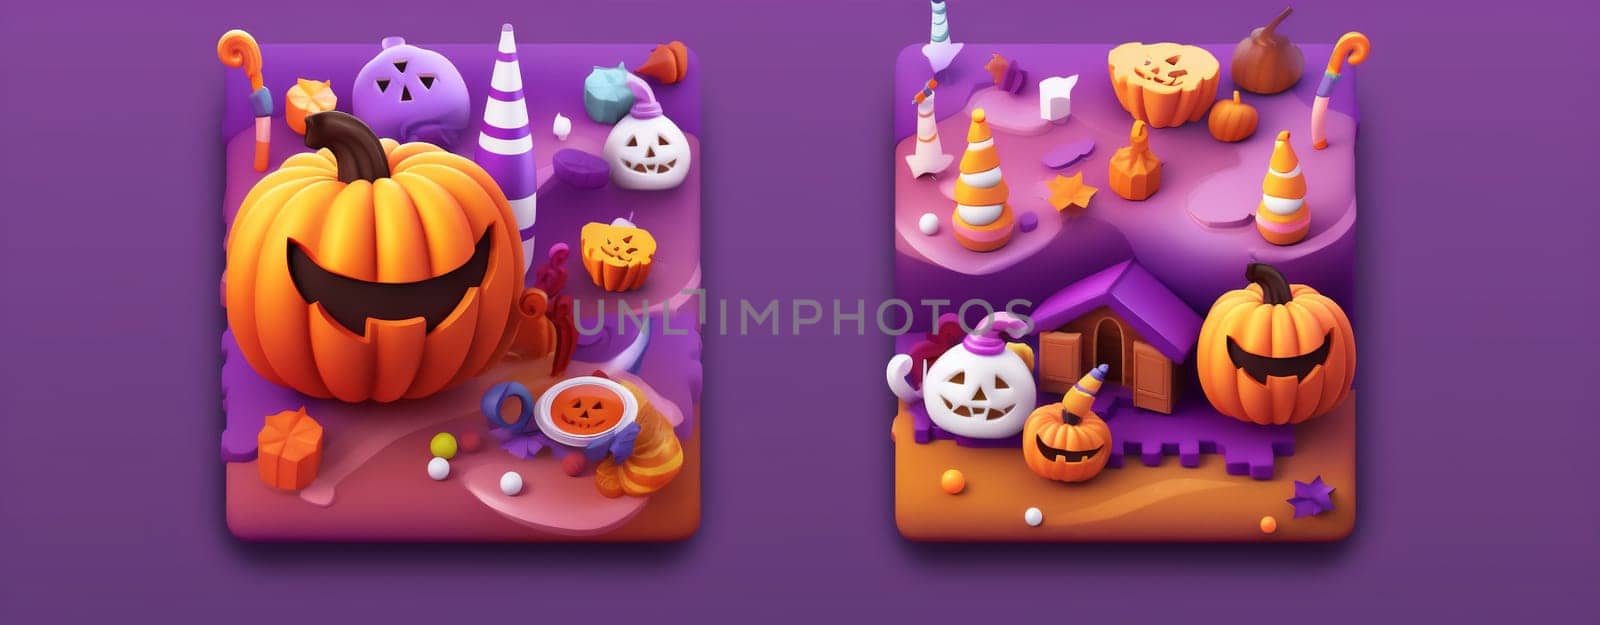 pumpkin holiday sweet decorated halloween icing bat party candy orange festive colourful symbol treat spider table autumn purple celebration creepy. Generative AI.